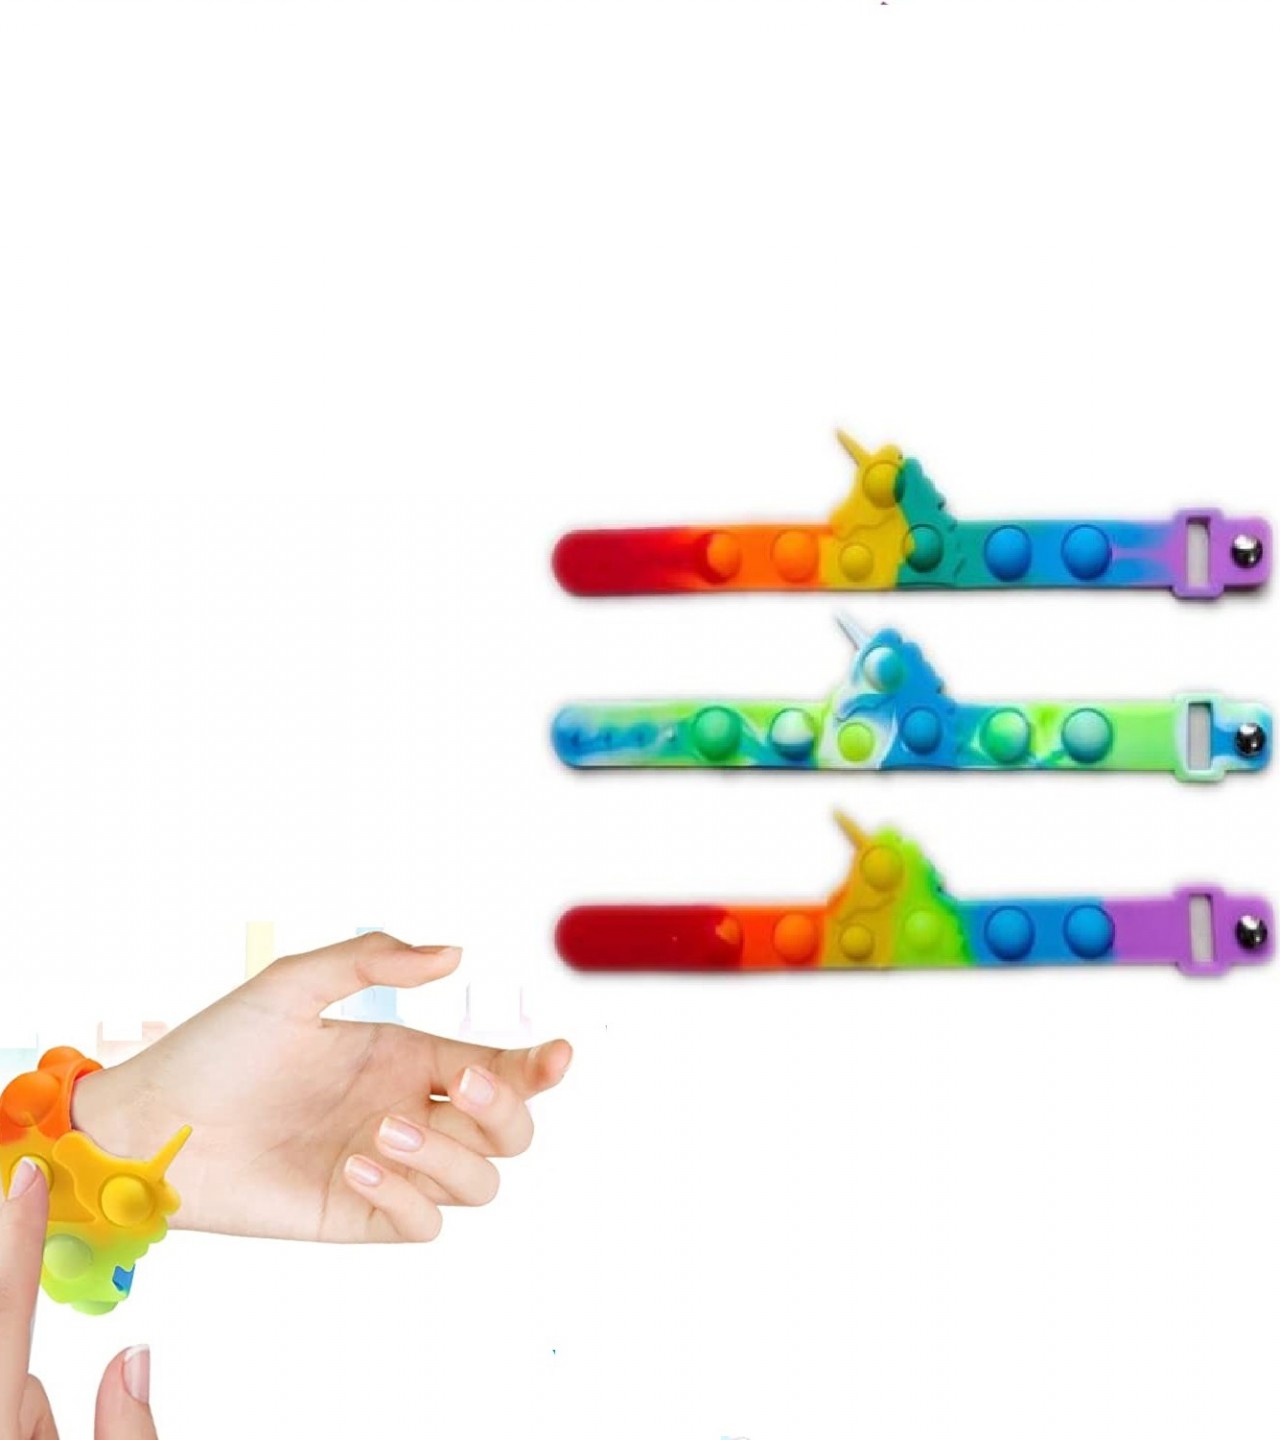 Adjustable Pop It Fidget Wristband Unicorn Fidget Toy Stress Relief For Kids and Adults